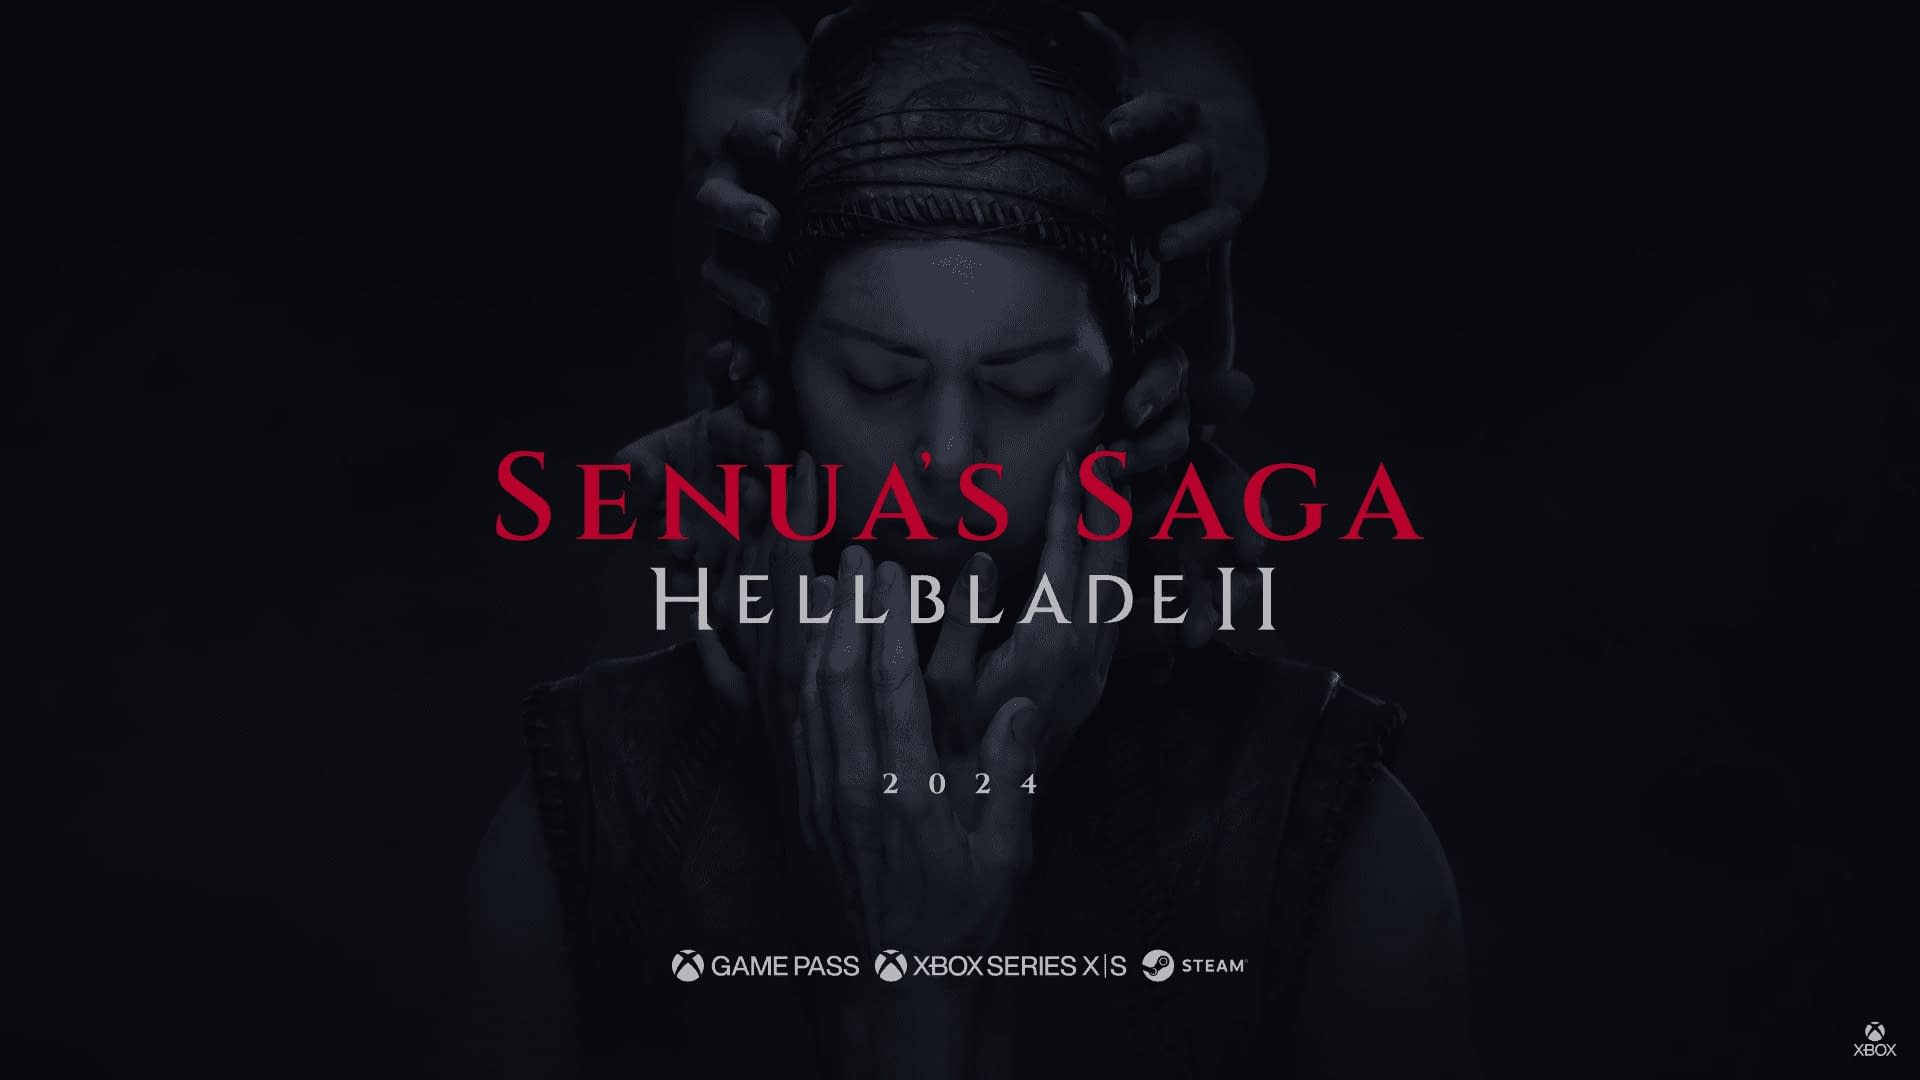 Senua’s Saga: The Game Awards Fragman For Hellblade 2 Published